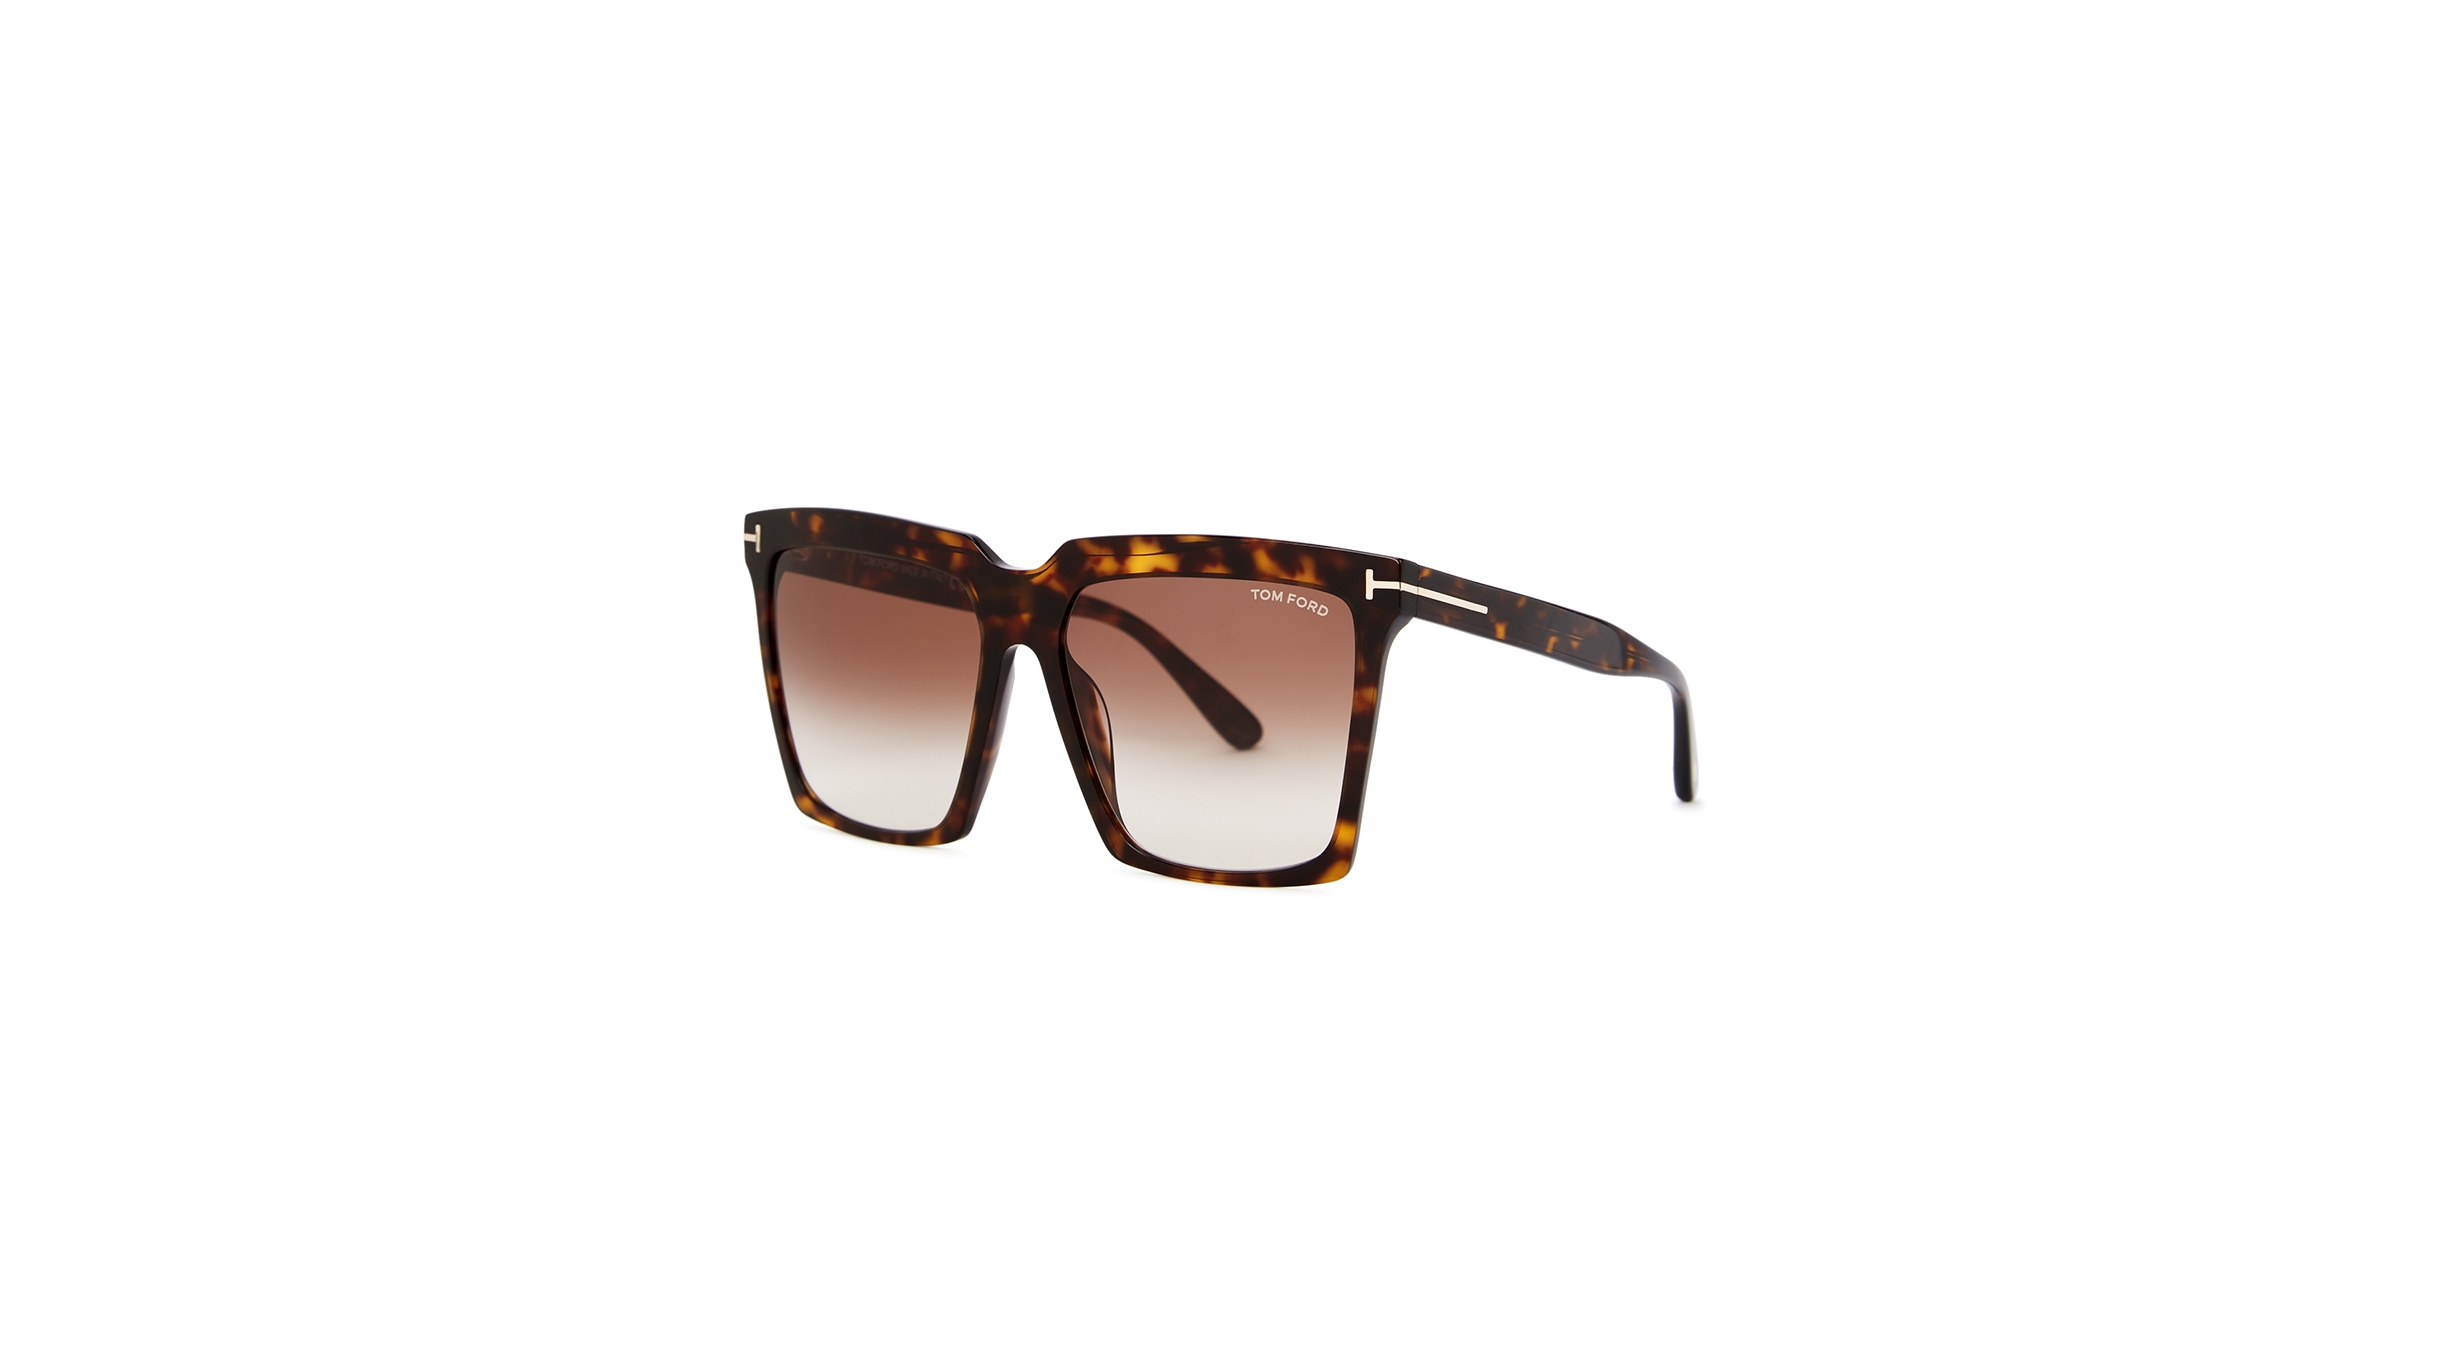 Tom Ford Sabrina tortoiseshell square-frame sunglasses - Harvey Nichols